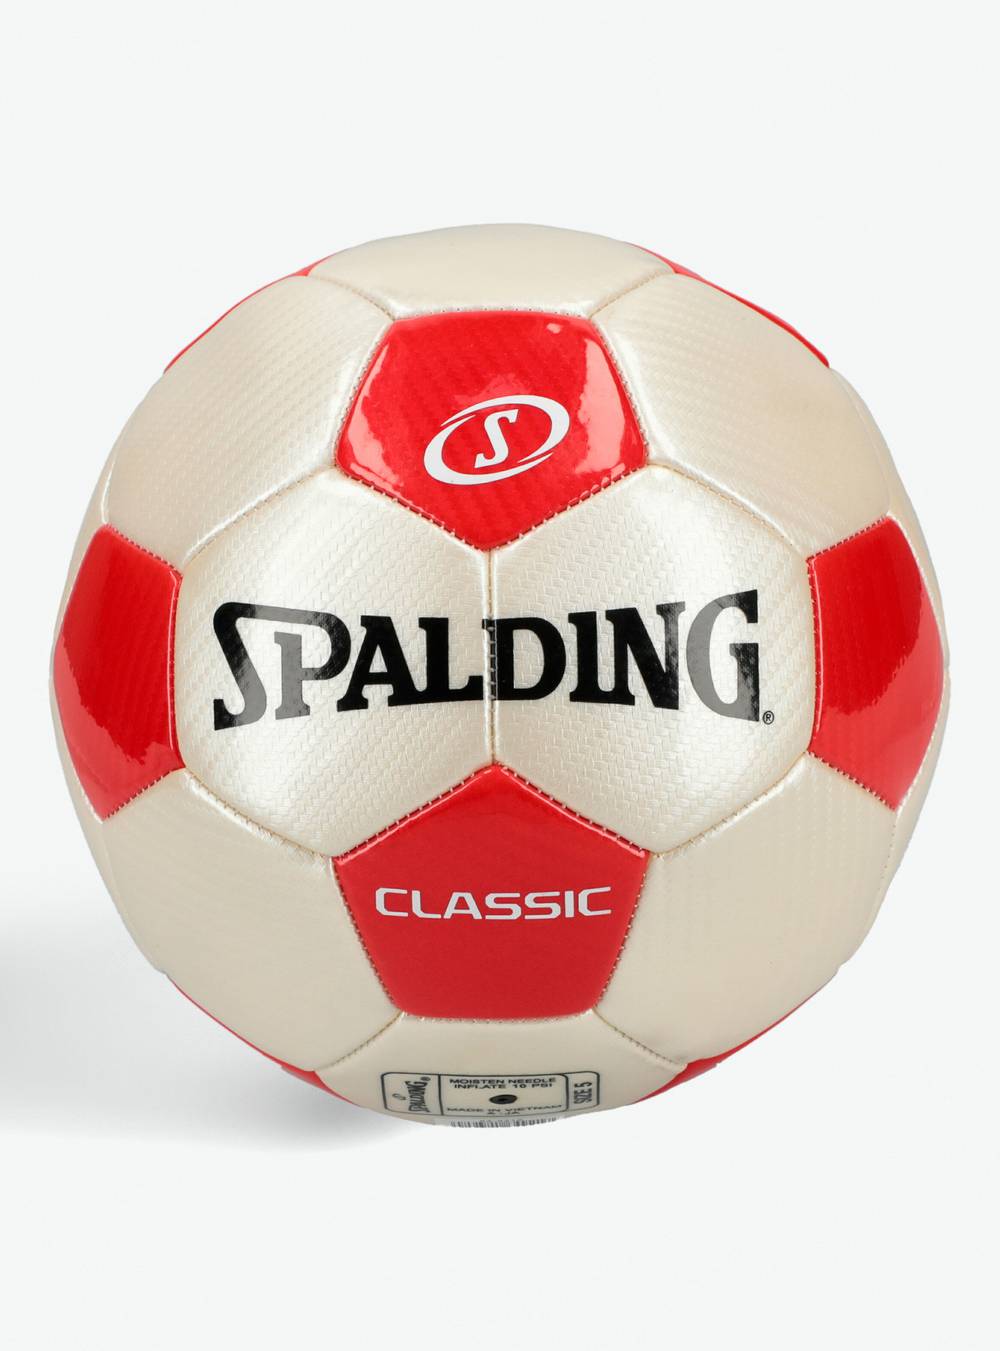 Spalding pelota fútbol tornado classic rojo-blanco (1 un)